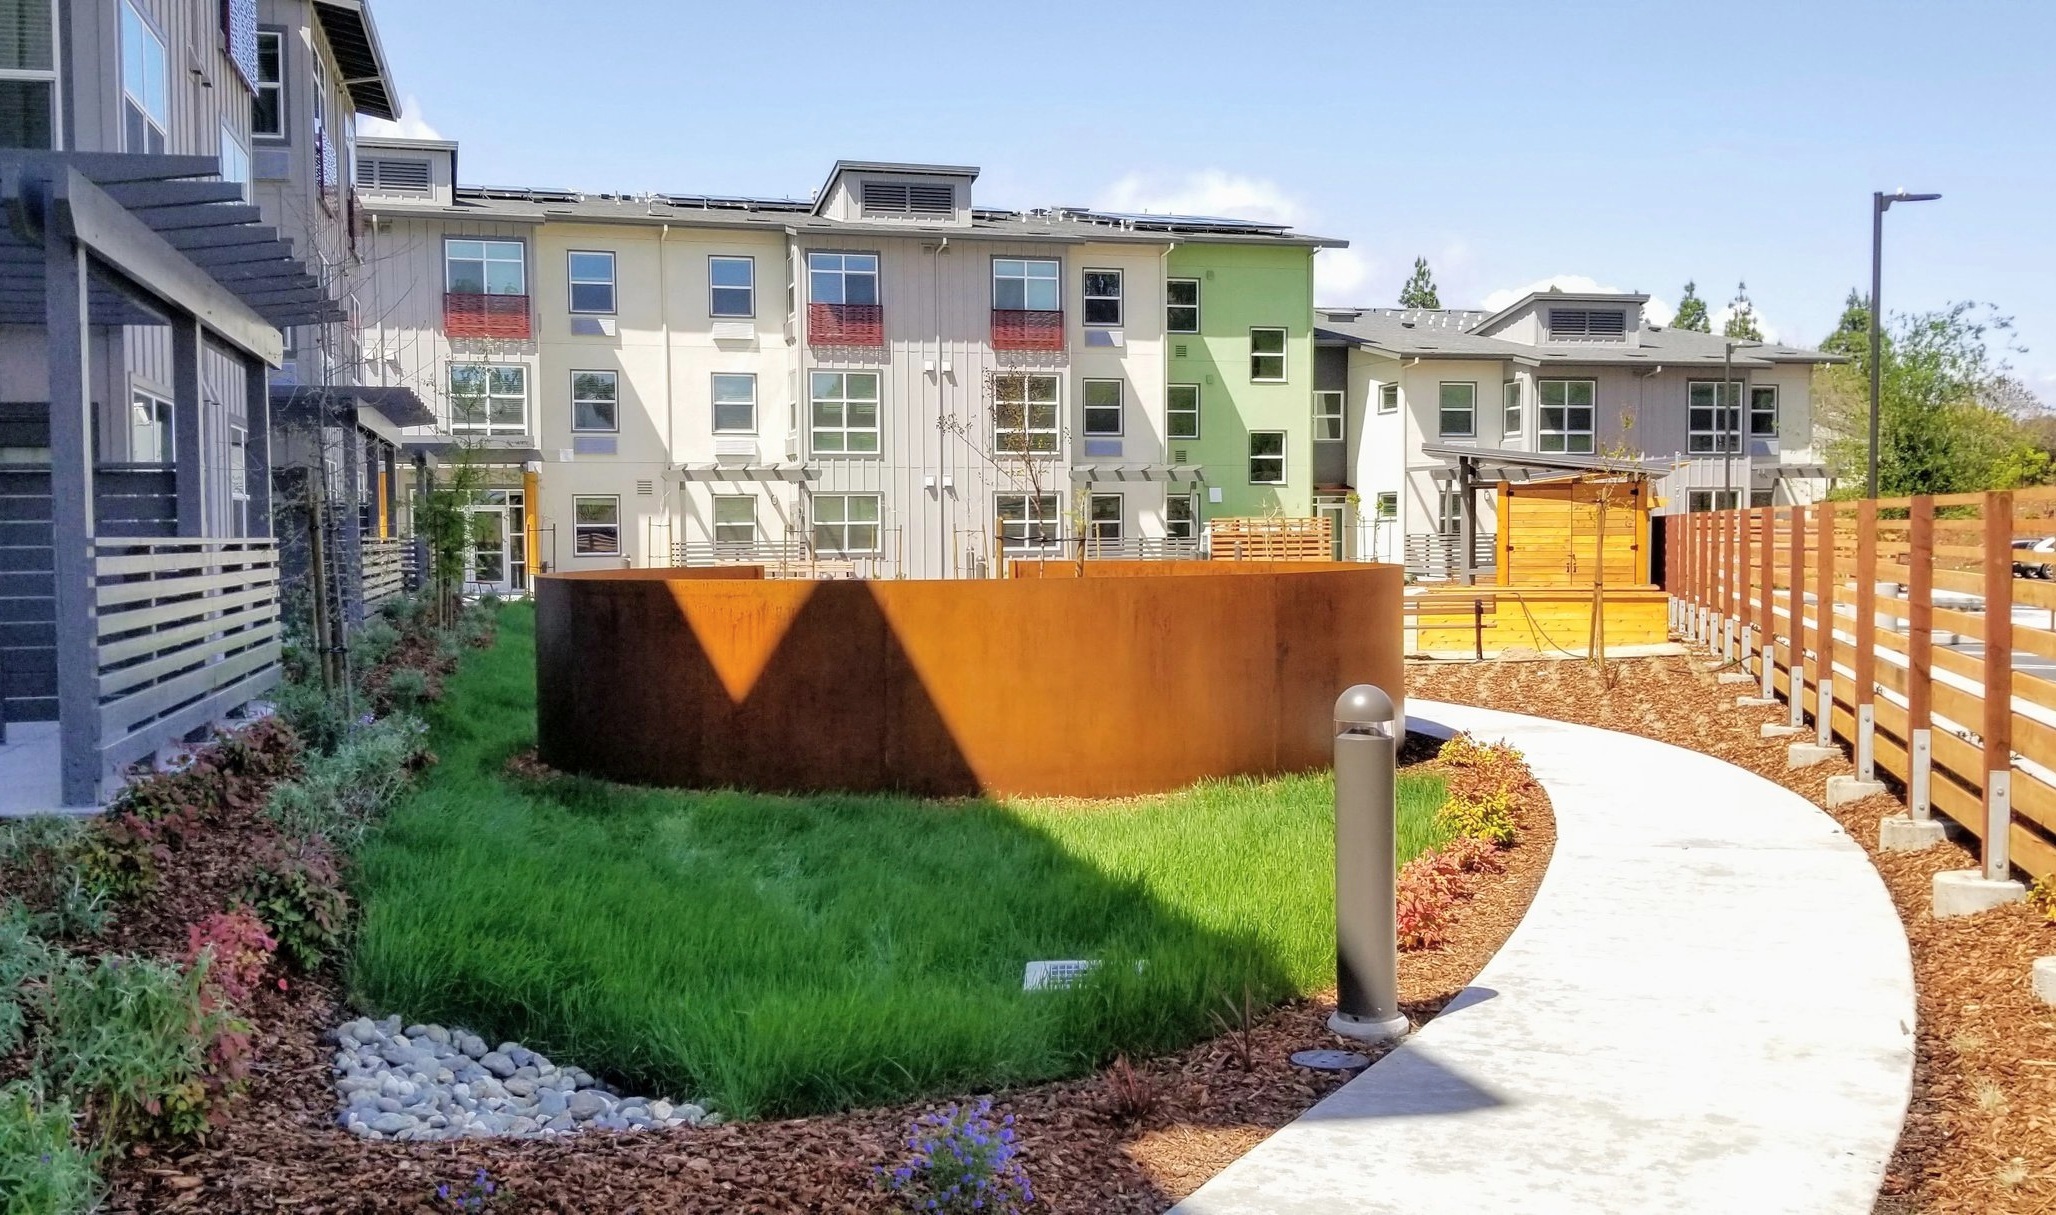   Tabora Gardens Senior Apartments     Gold Nugget Award Winner - Best Affordable Senior Housing Community     ,   Antioch 